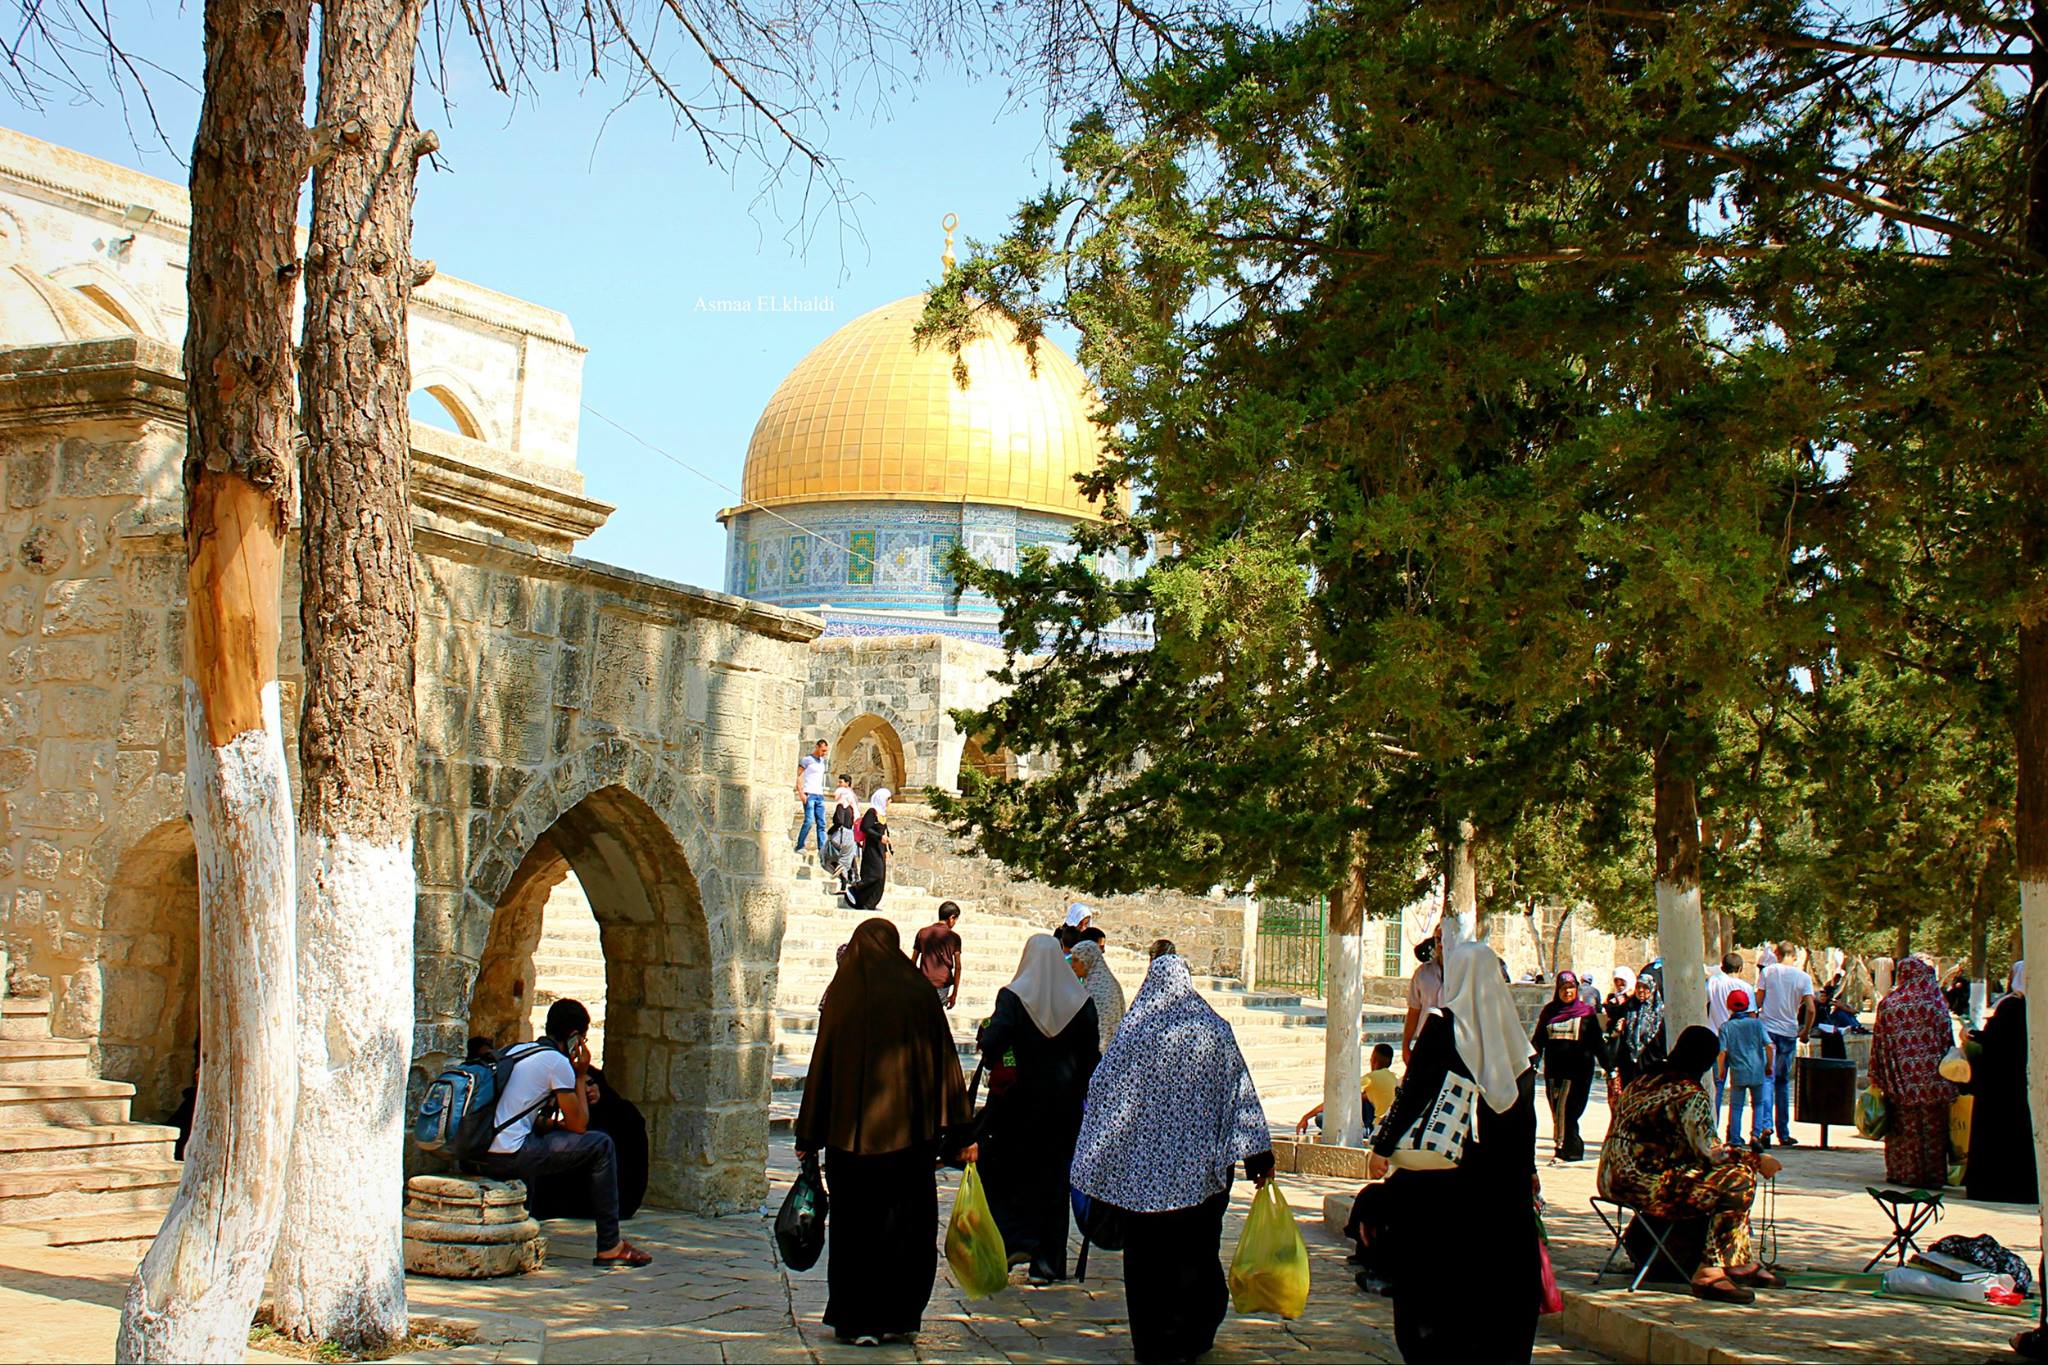 Leading up to Al-Aqsa Mosque